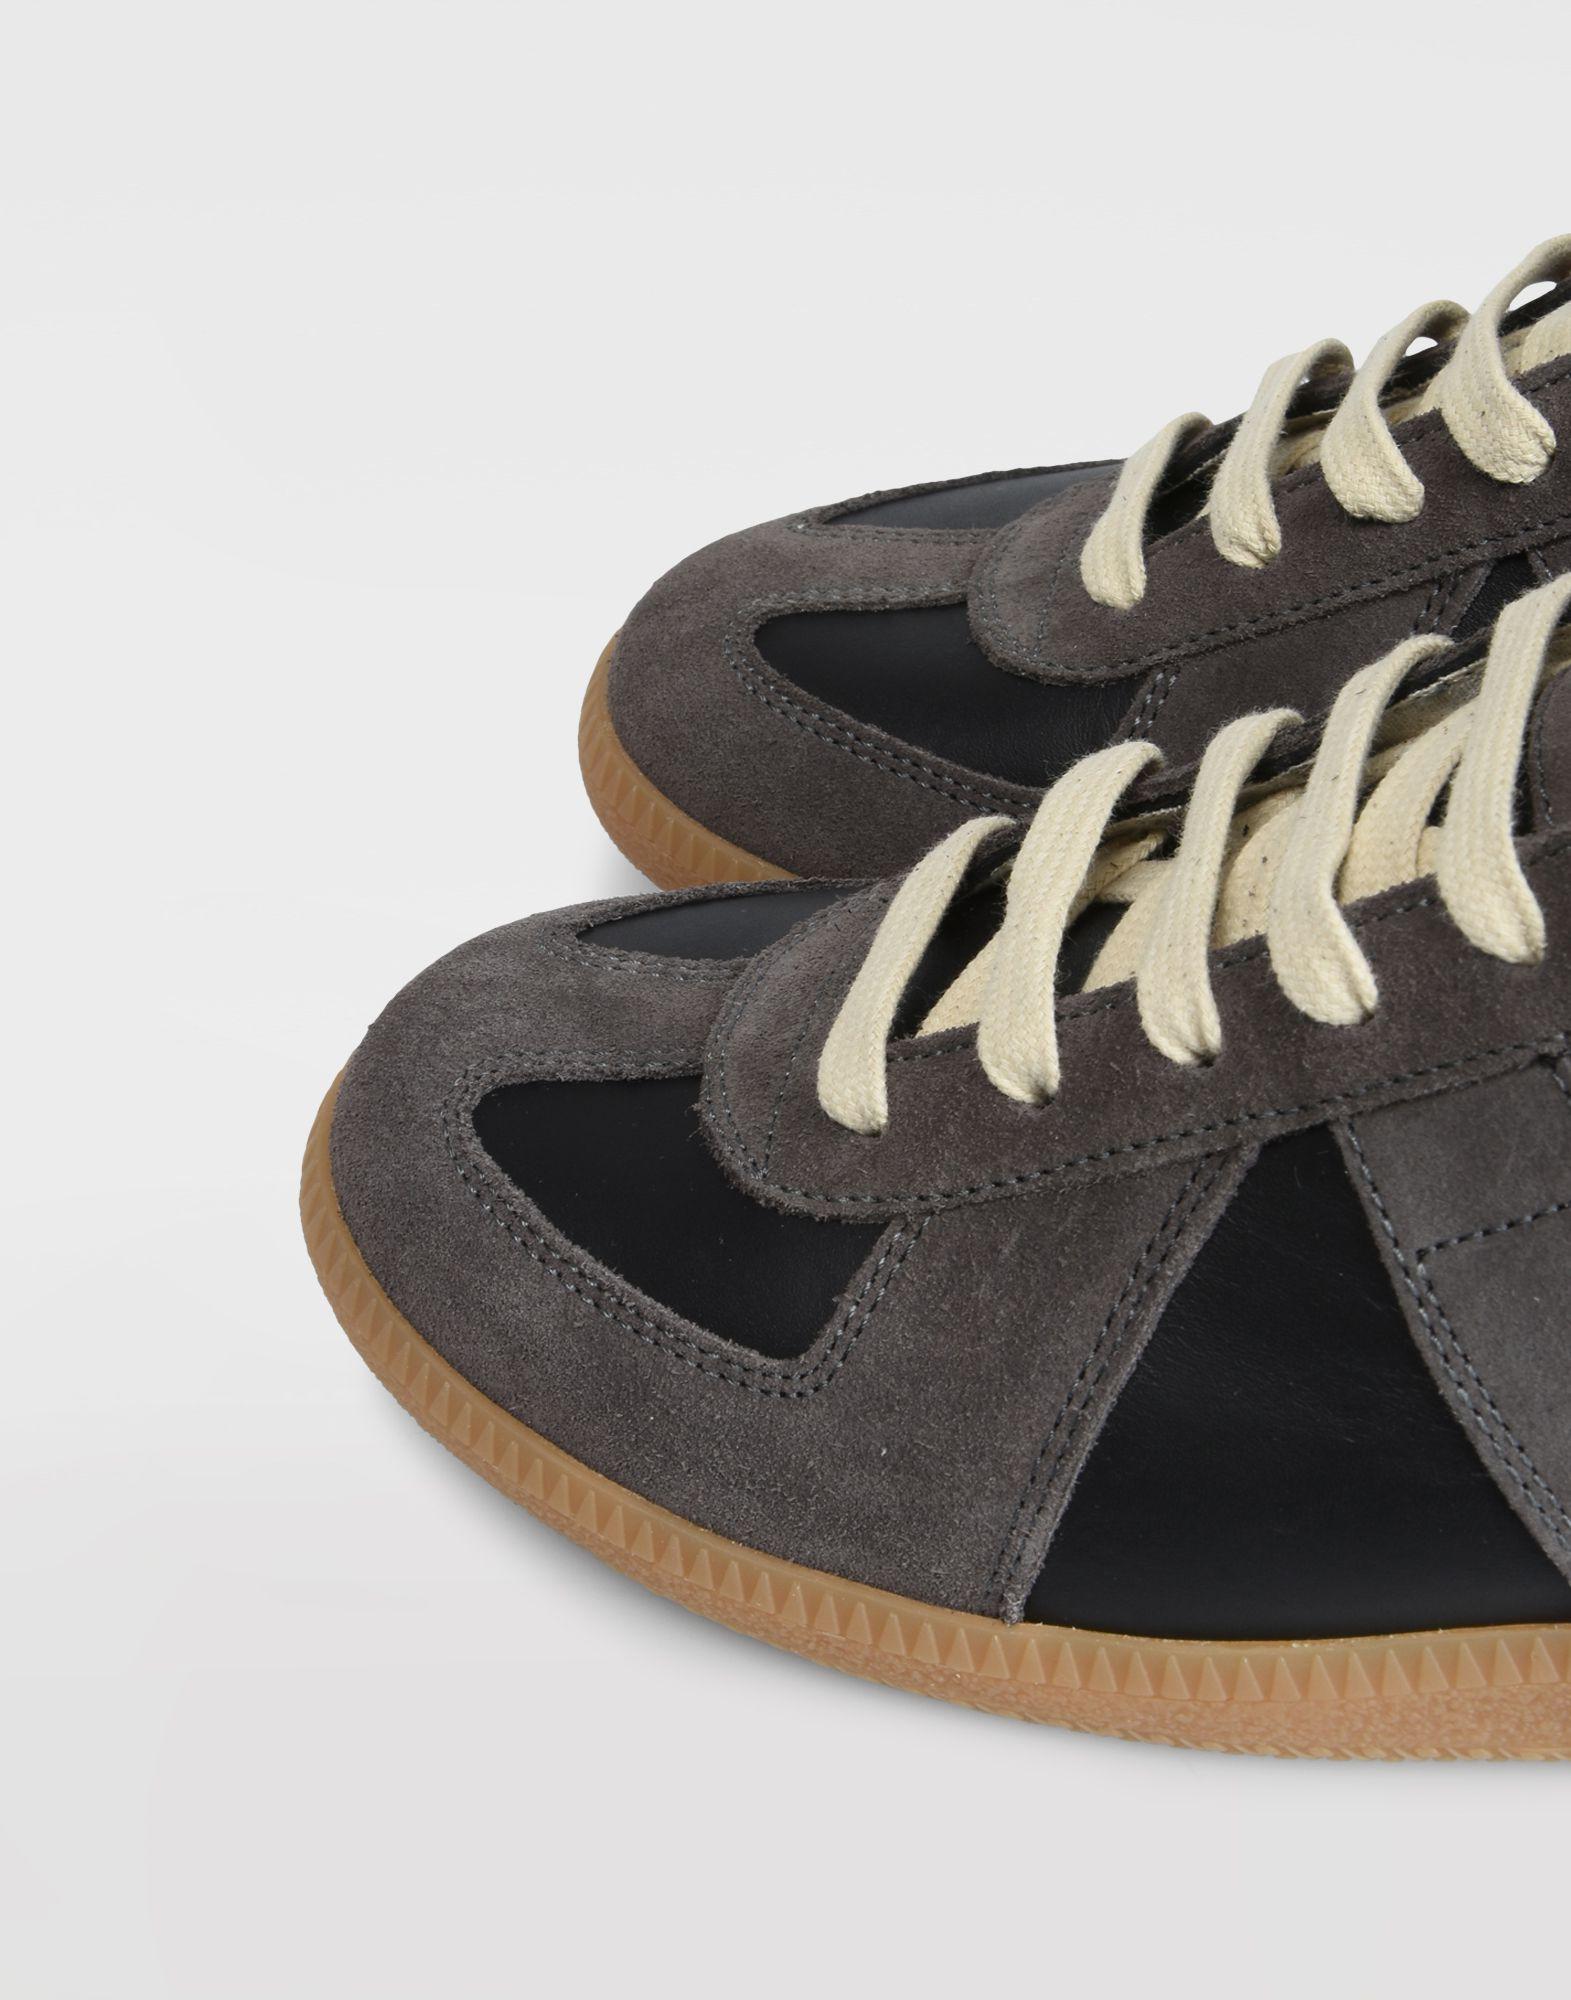 Maison Margiela Leather Replica Calfskin Sneakers in Black - Lyst